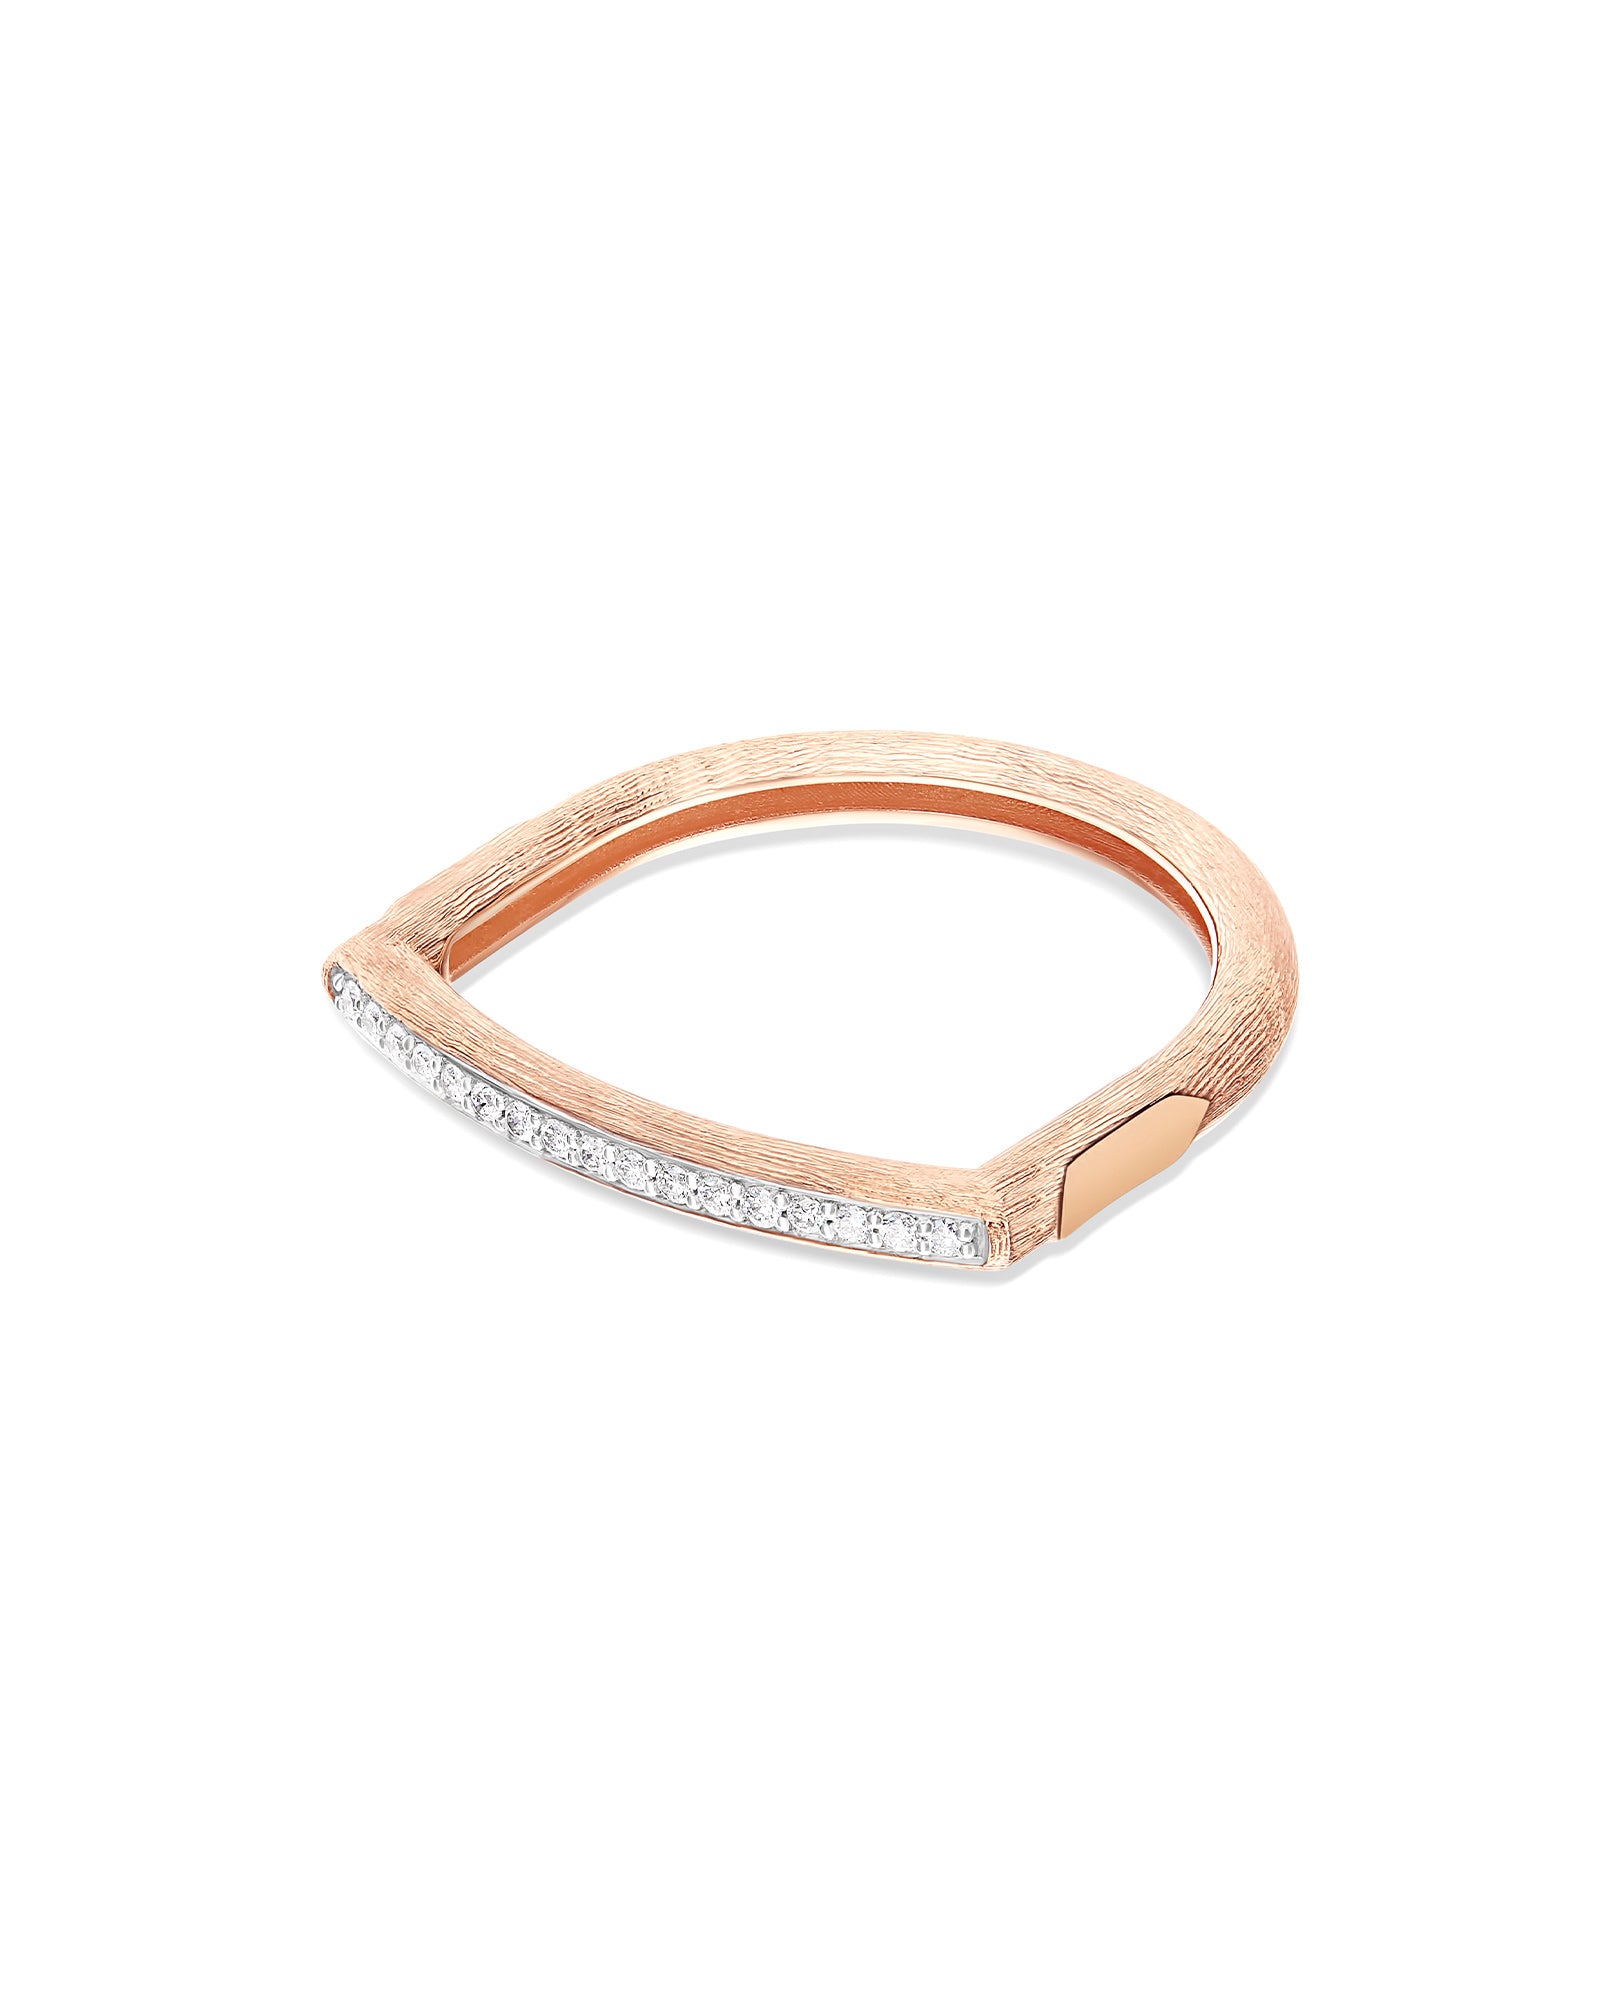 "Libera" Gold and diamonds pavé essential ring